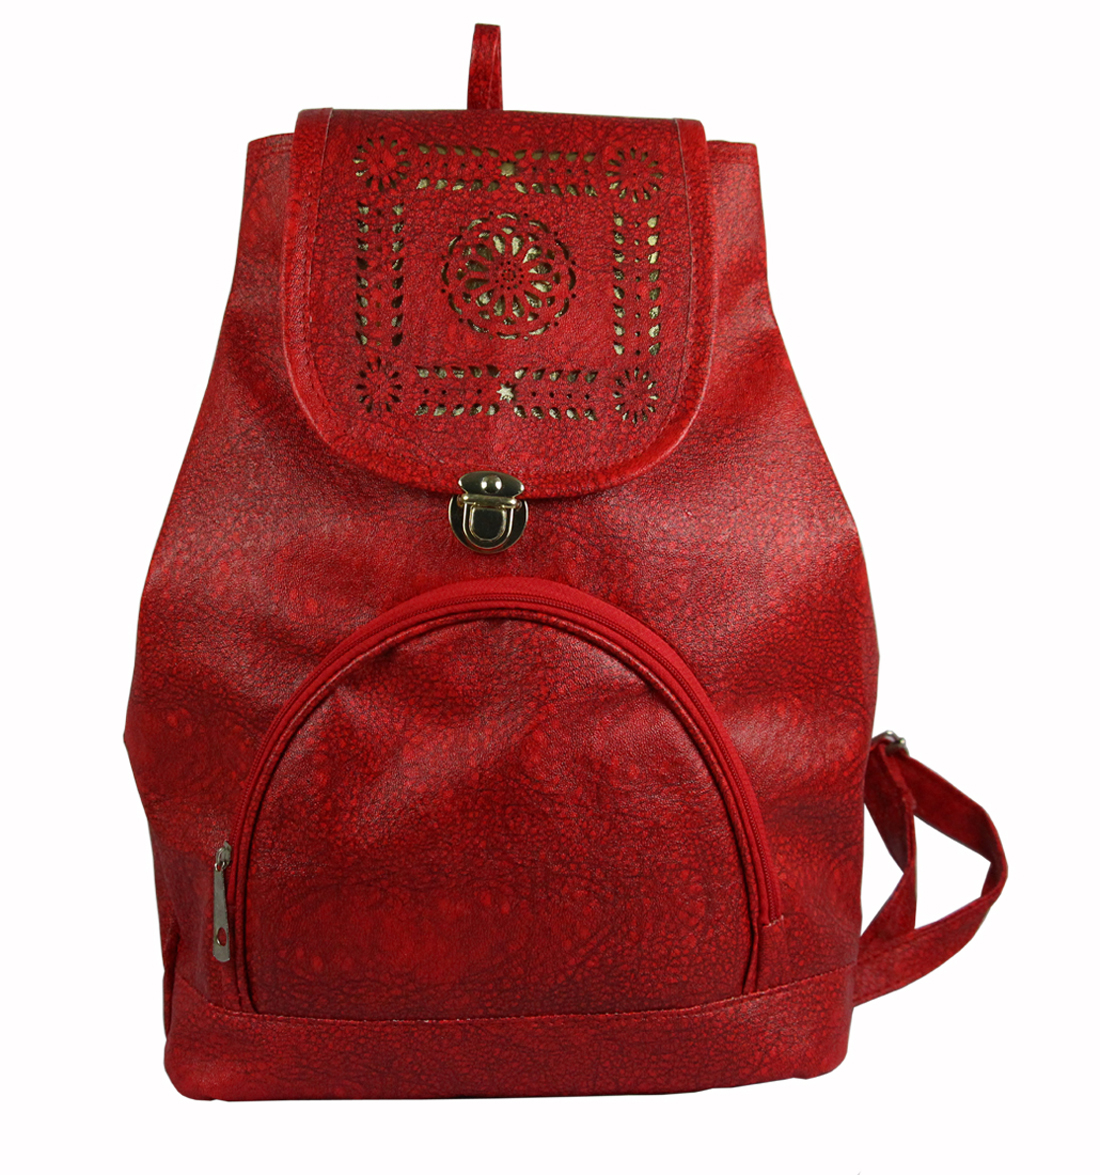 Buy SPERO Waterproof Trendy Casual stylish colourful School Bag college